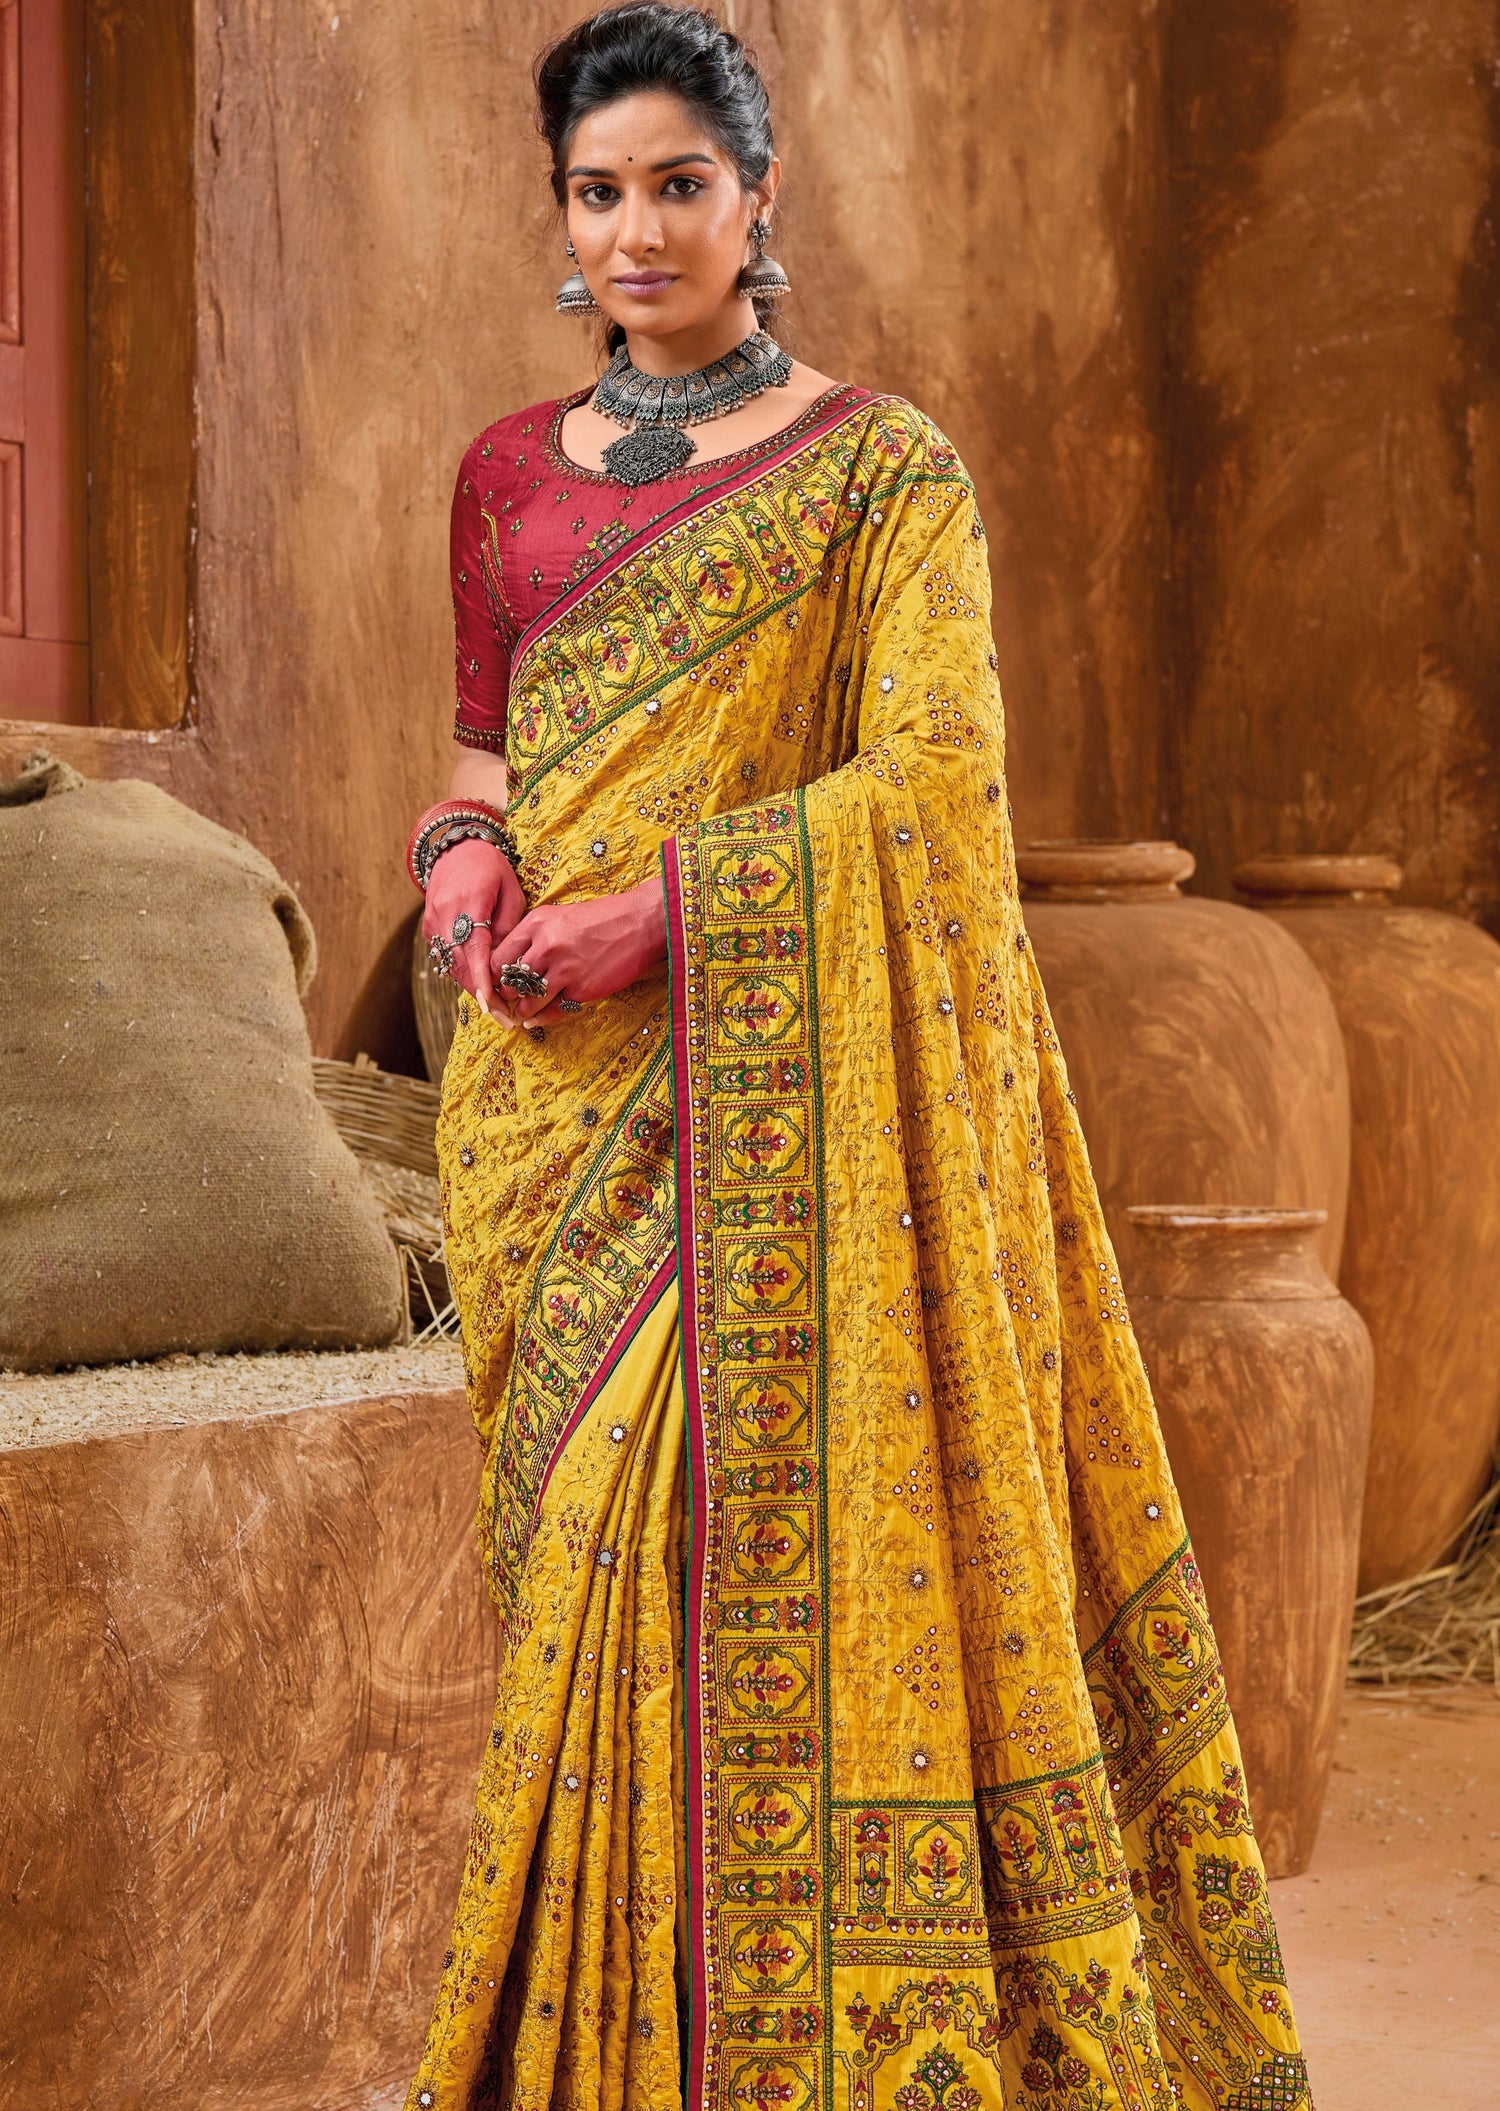 Kutch mirror work embroidery yellow red saree blouse gujarati designs online price india usa.